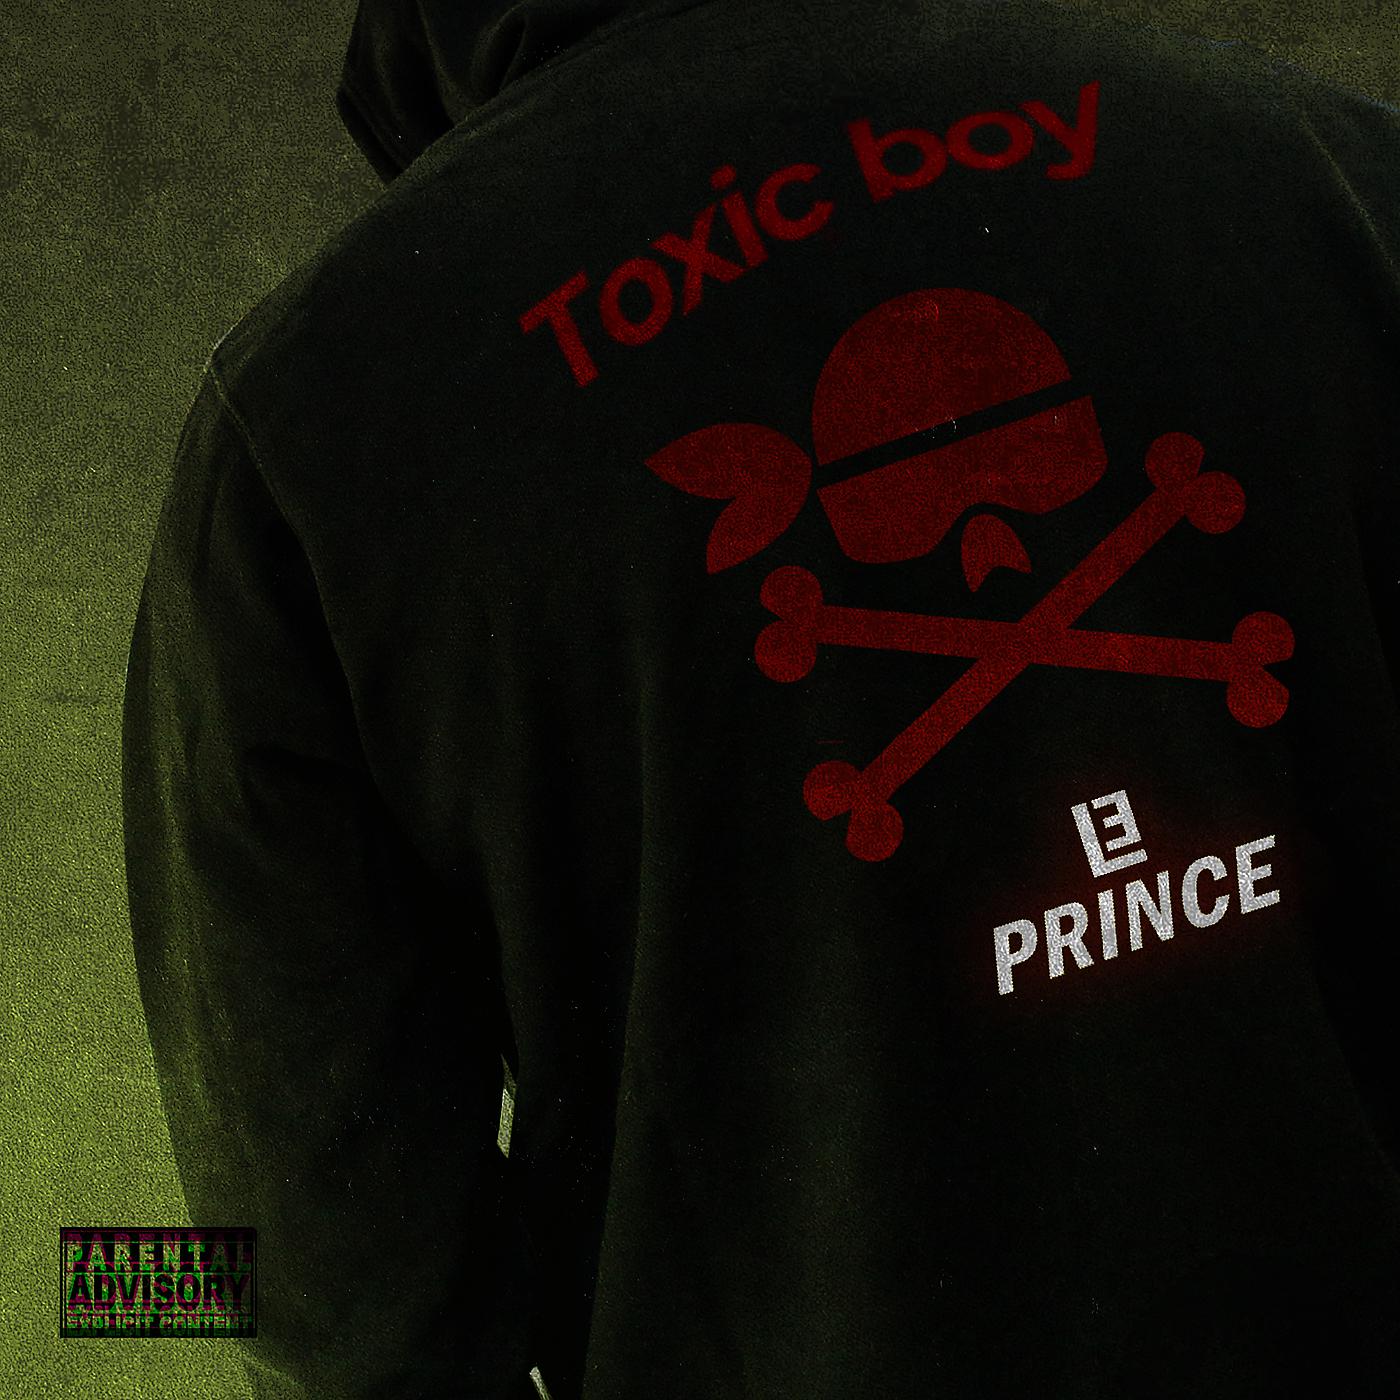 Постер альбома Toxic Boy